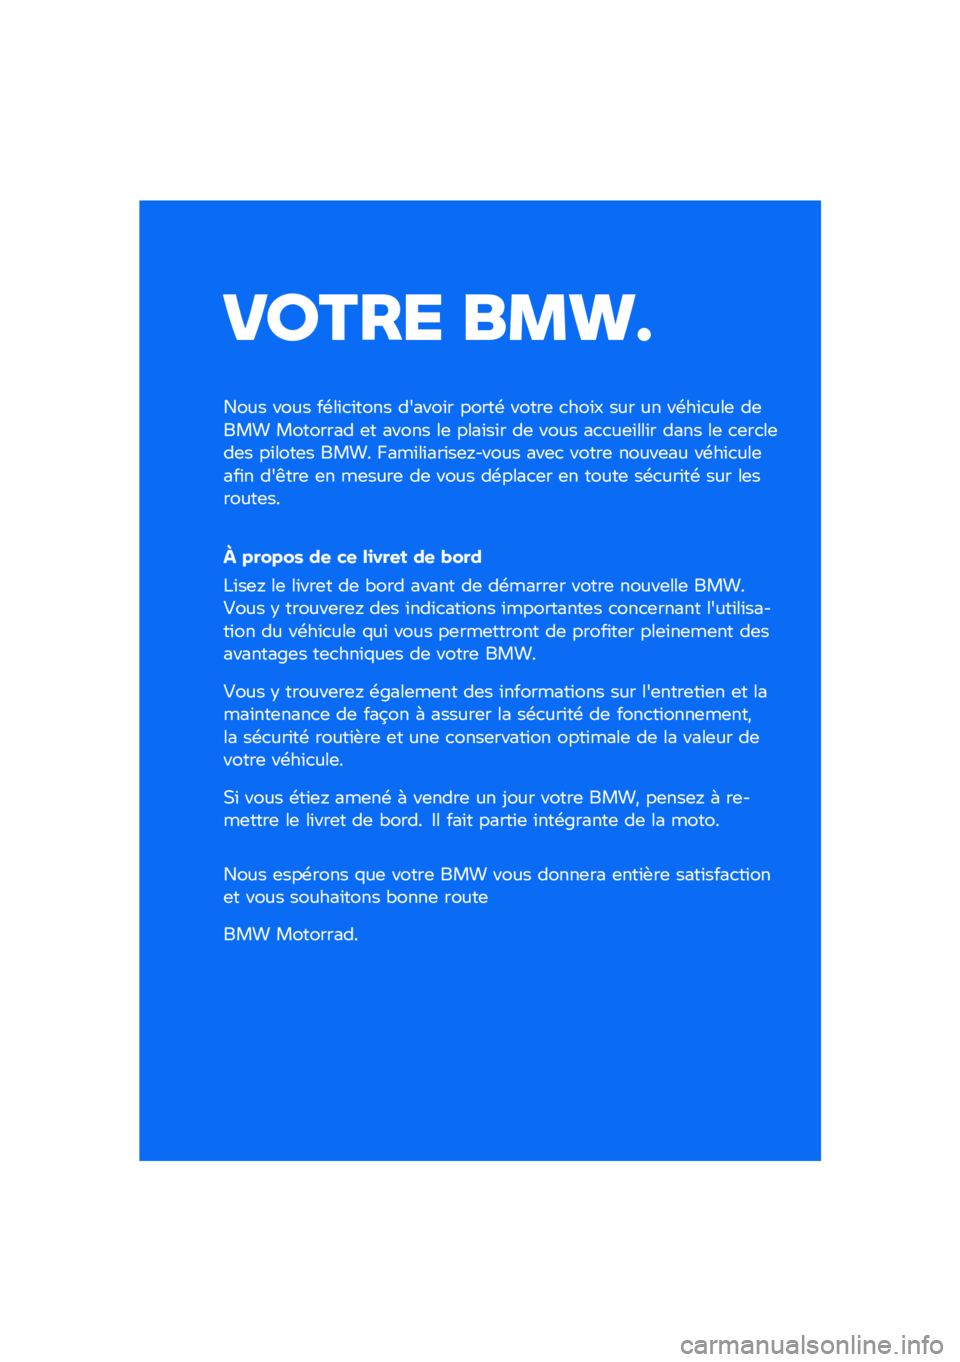 BMW MOTORRAD F 850 GS 2021  Livret de bord (in French) ����� ��\b�	�

���� ���� ��\b��\f�
�\f���� ������\f� �����\b �����	 �
���\f� ��� �� ��\b��\f�
���	 ��	��� �������� �	� ����� ��	 ���